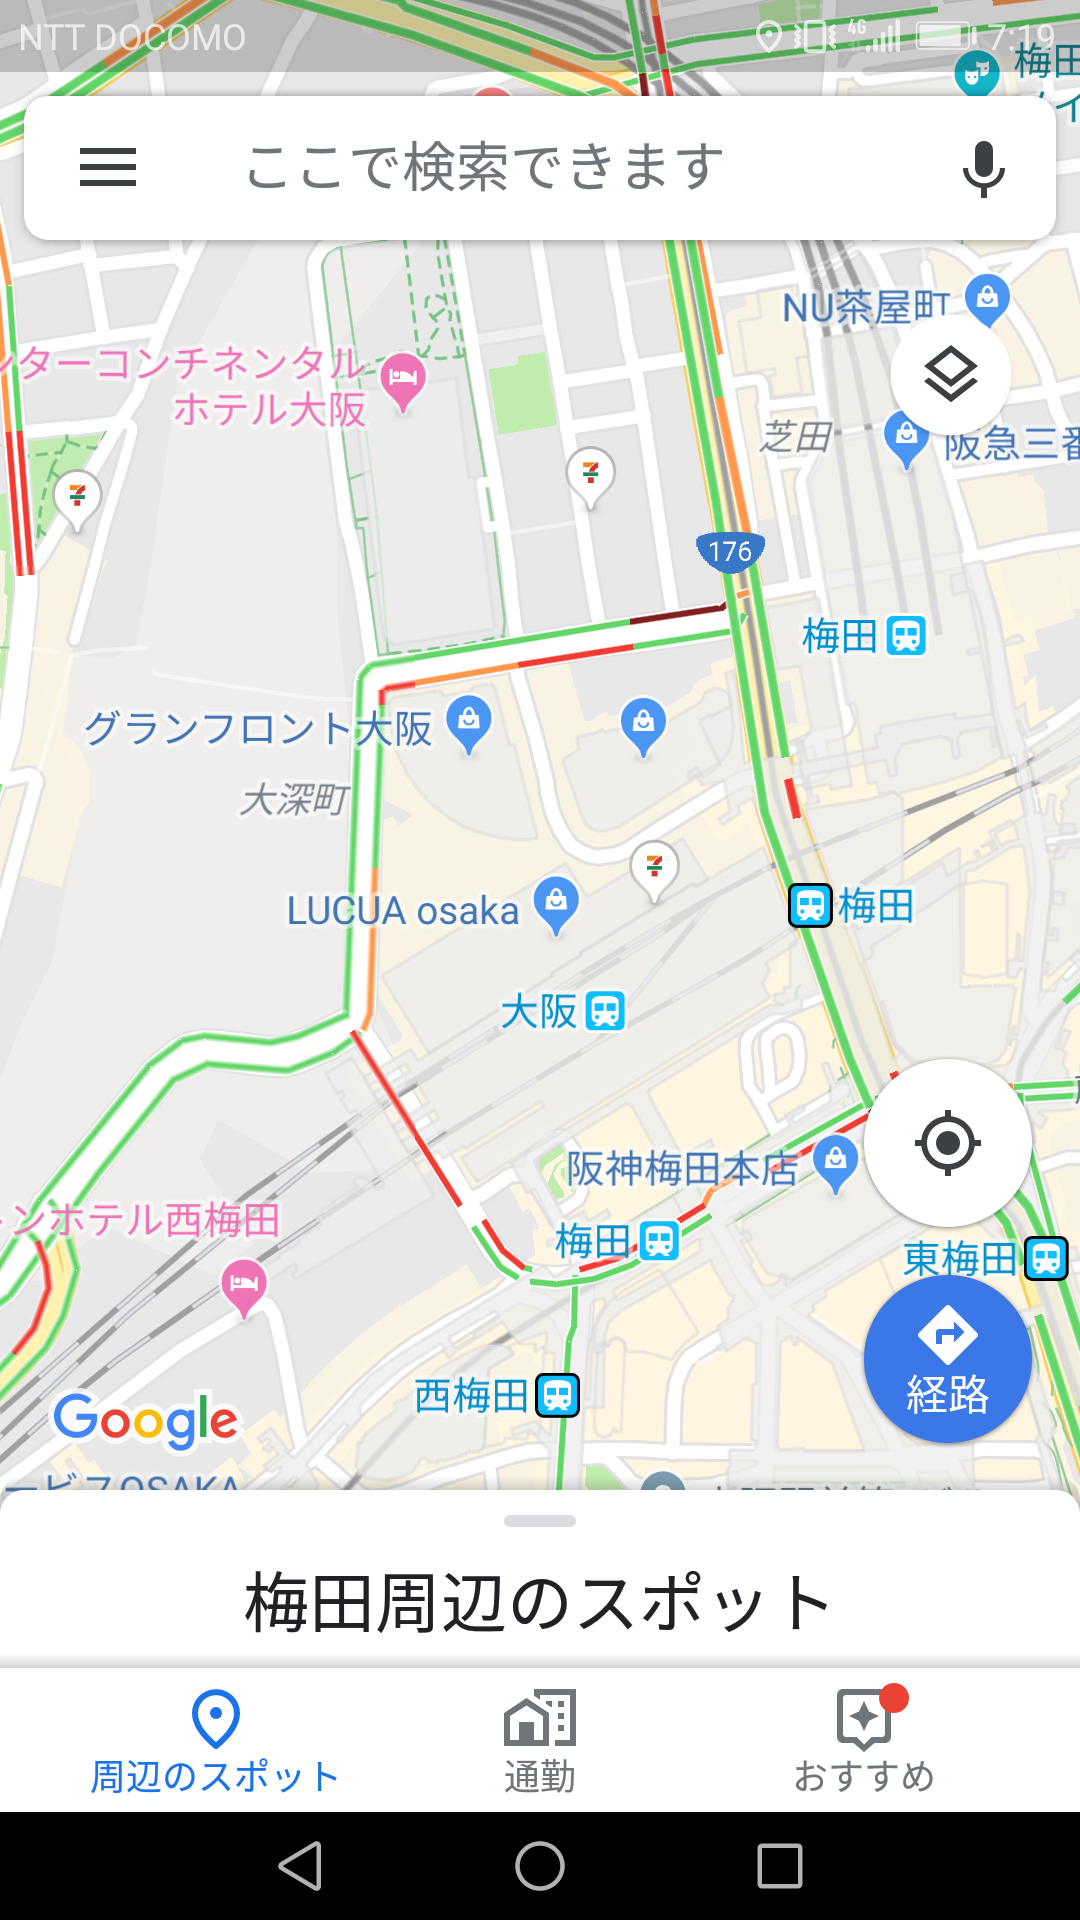 Google-traffic-umeda